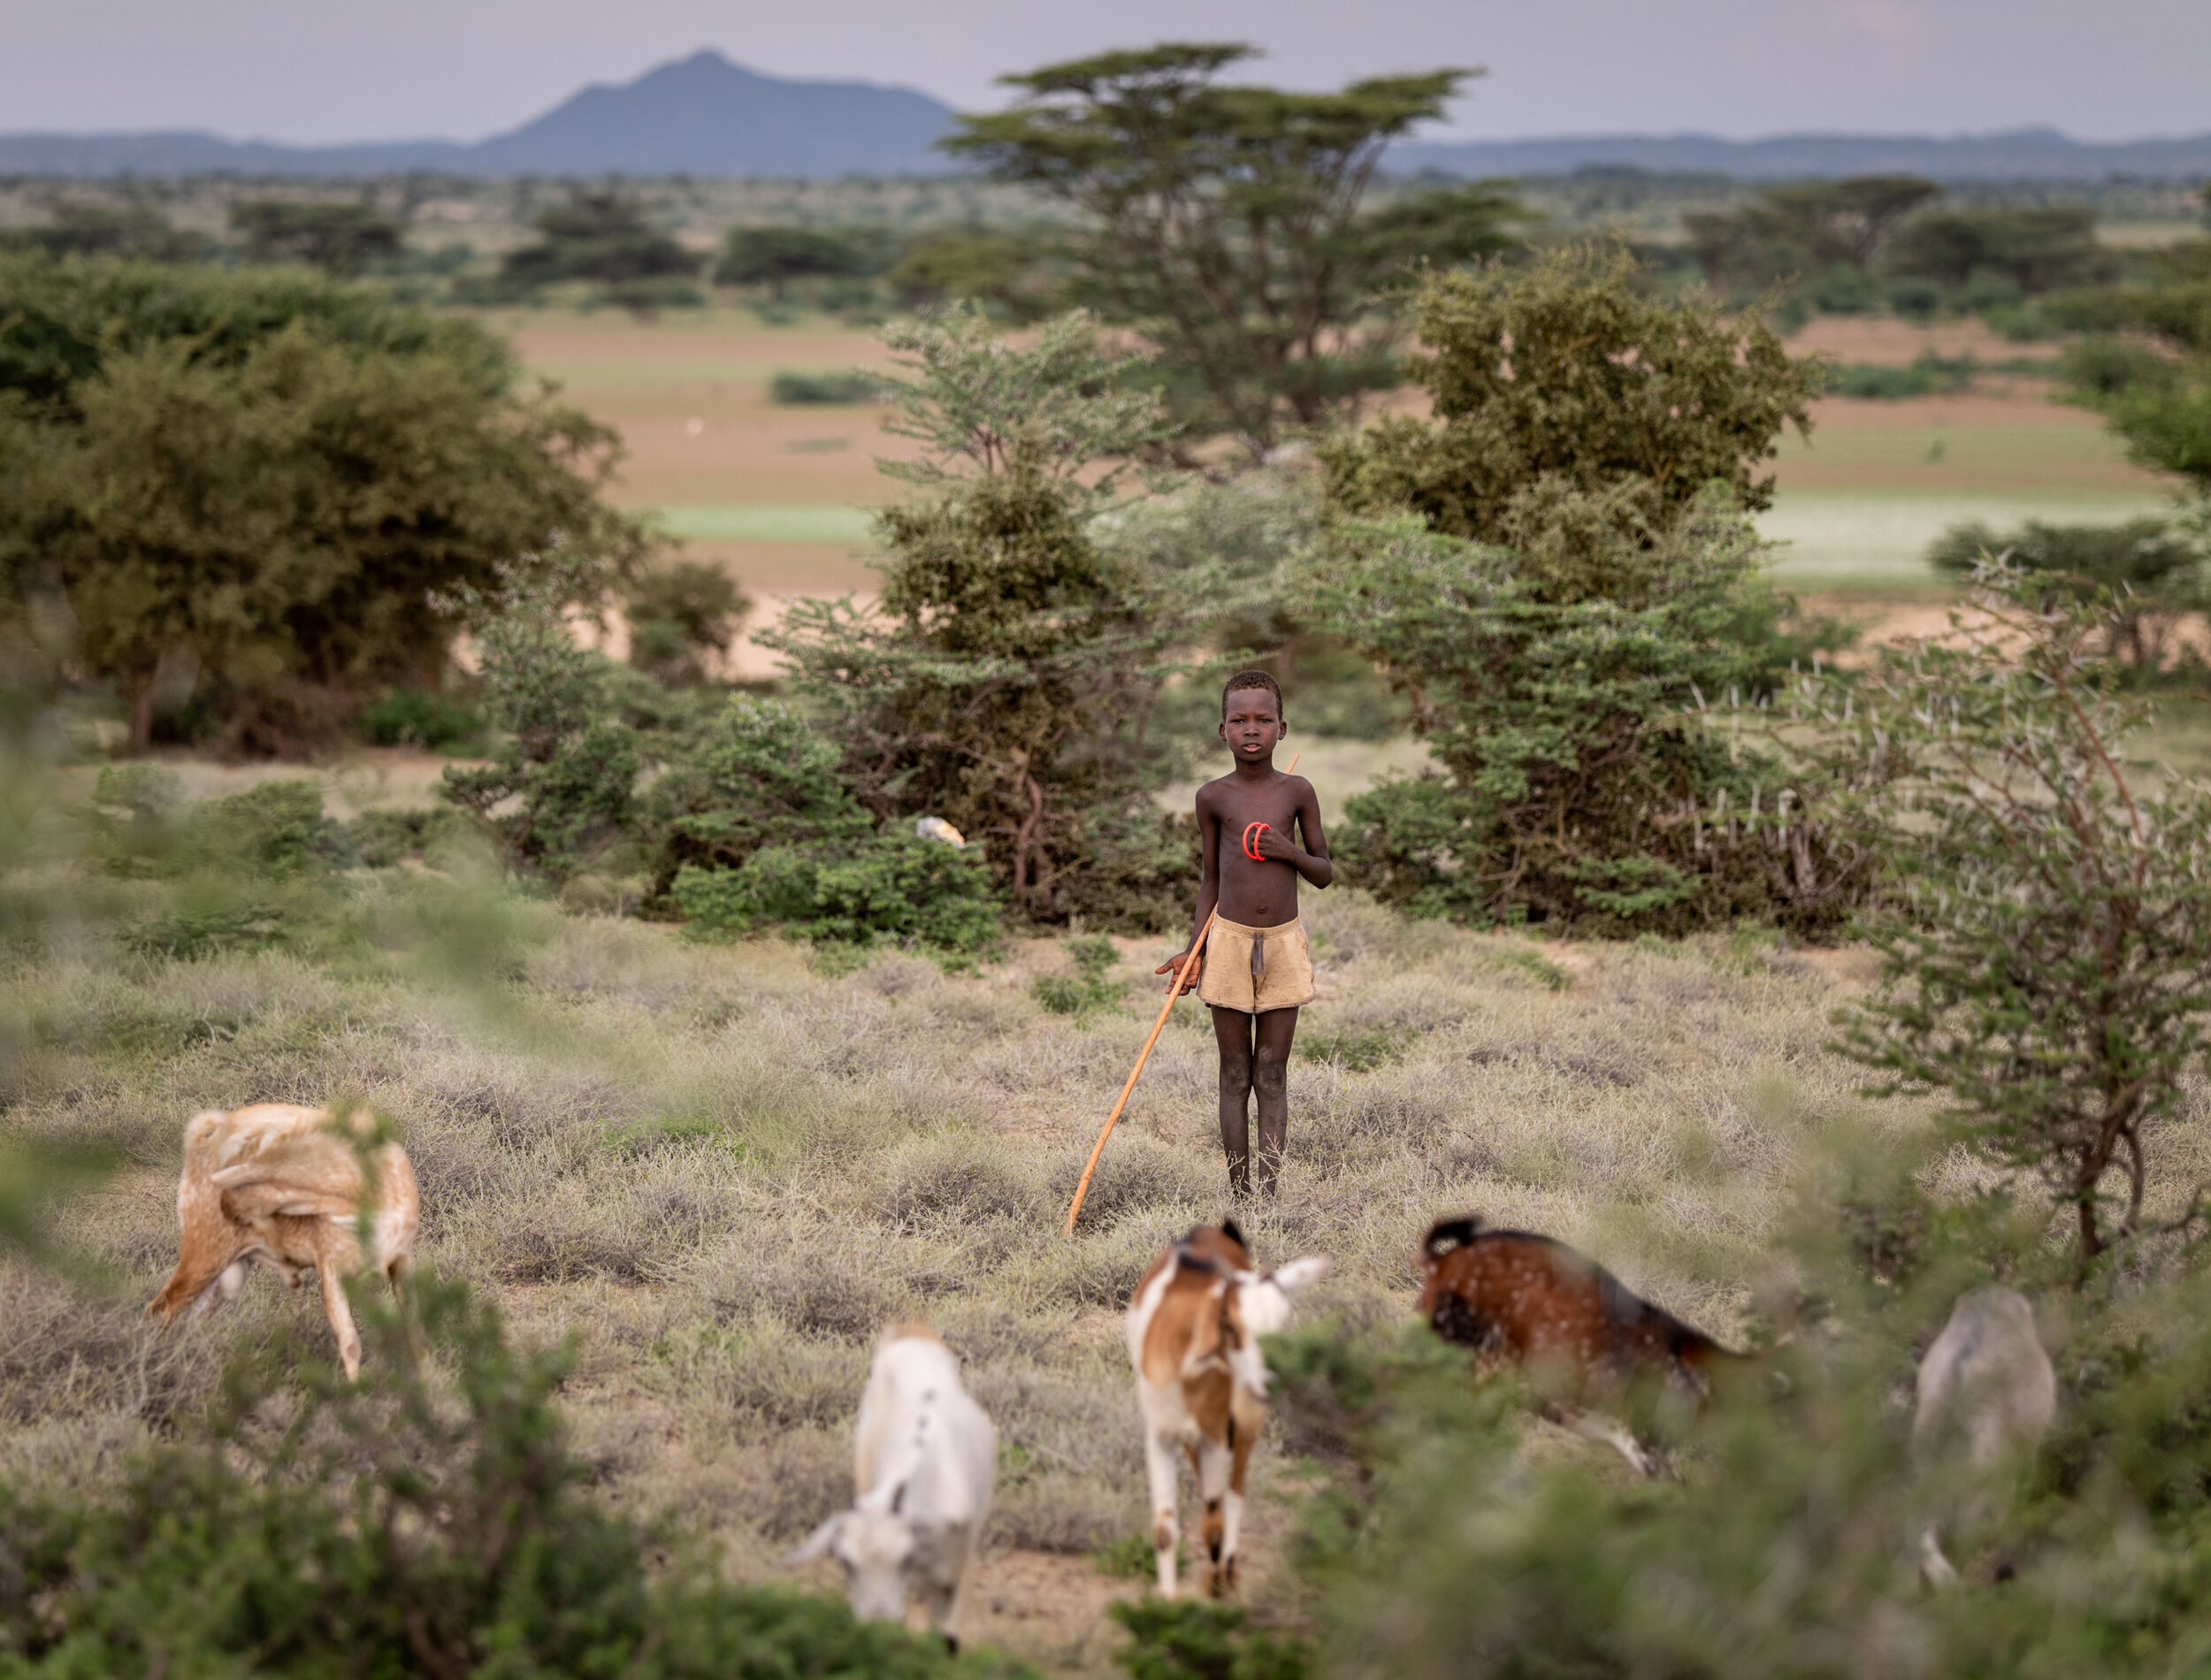 Ekidor Etir tends to his family’s goats on the shore of Lake Turkana in Kenya